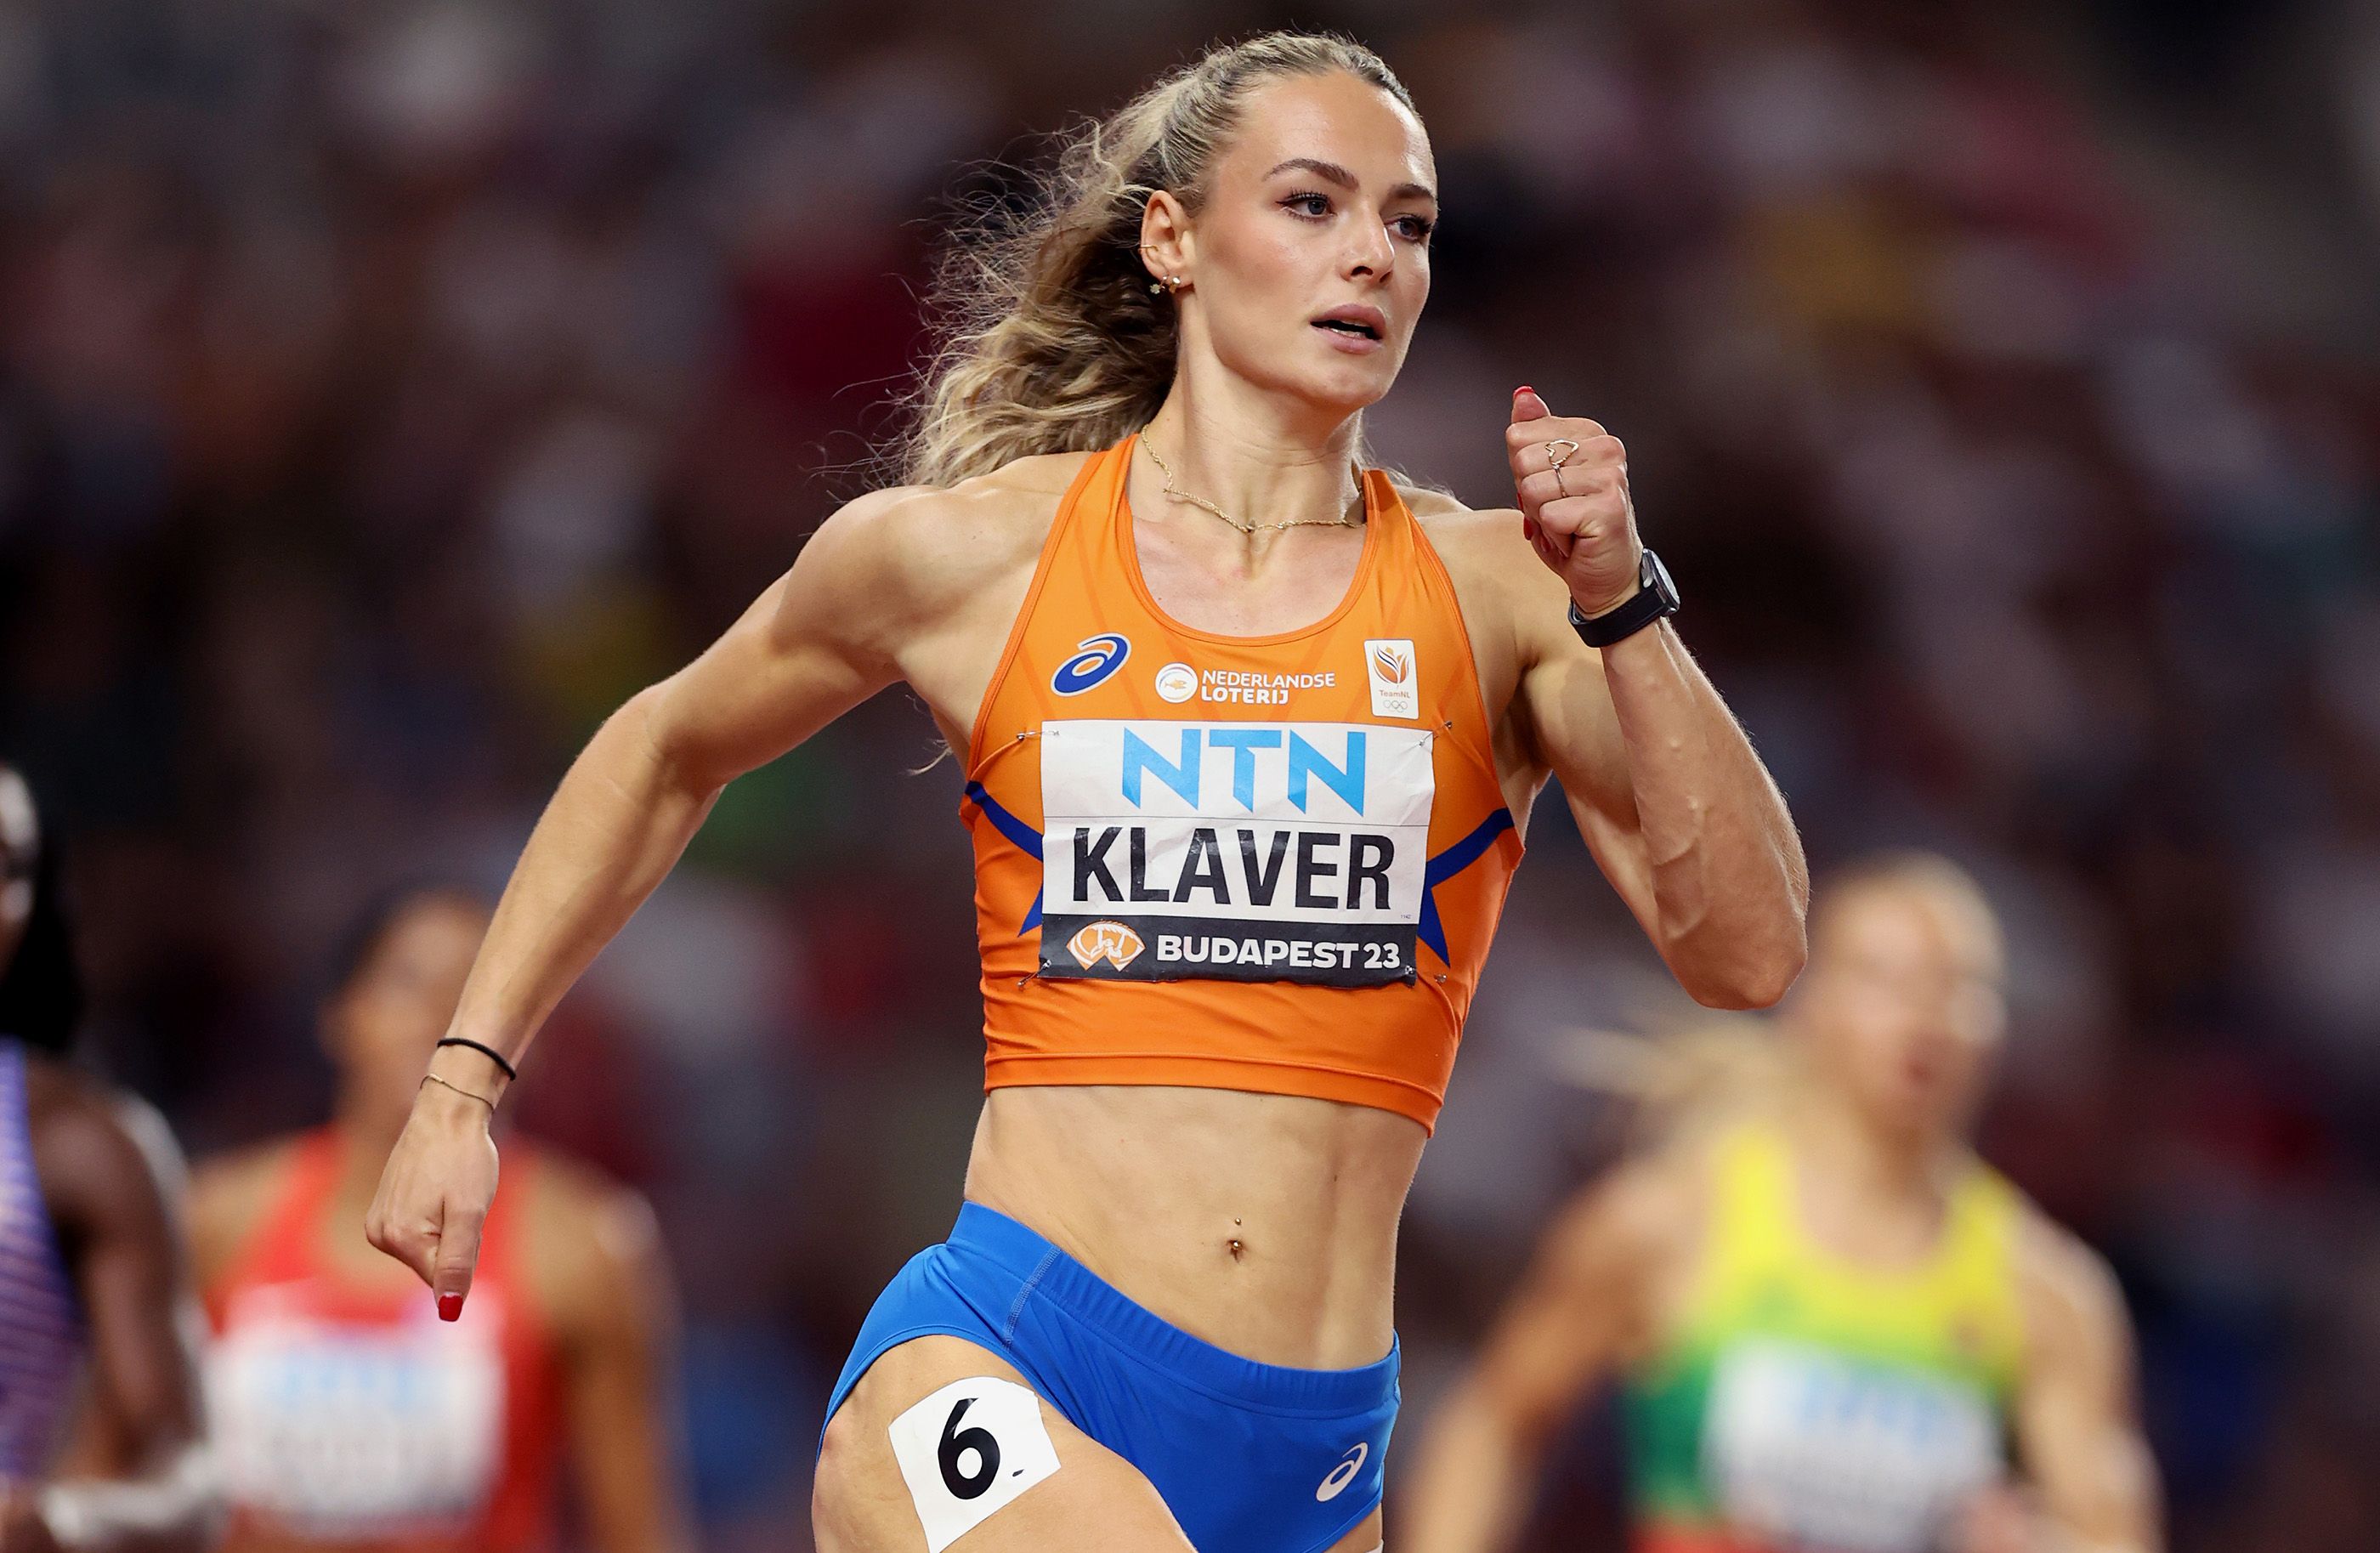 Lieke Klaver at the World Athletics Championships Budapest 23